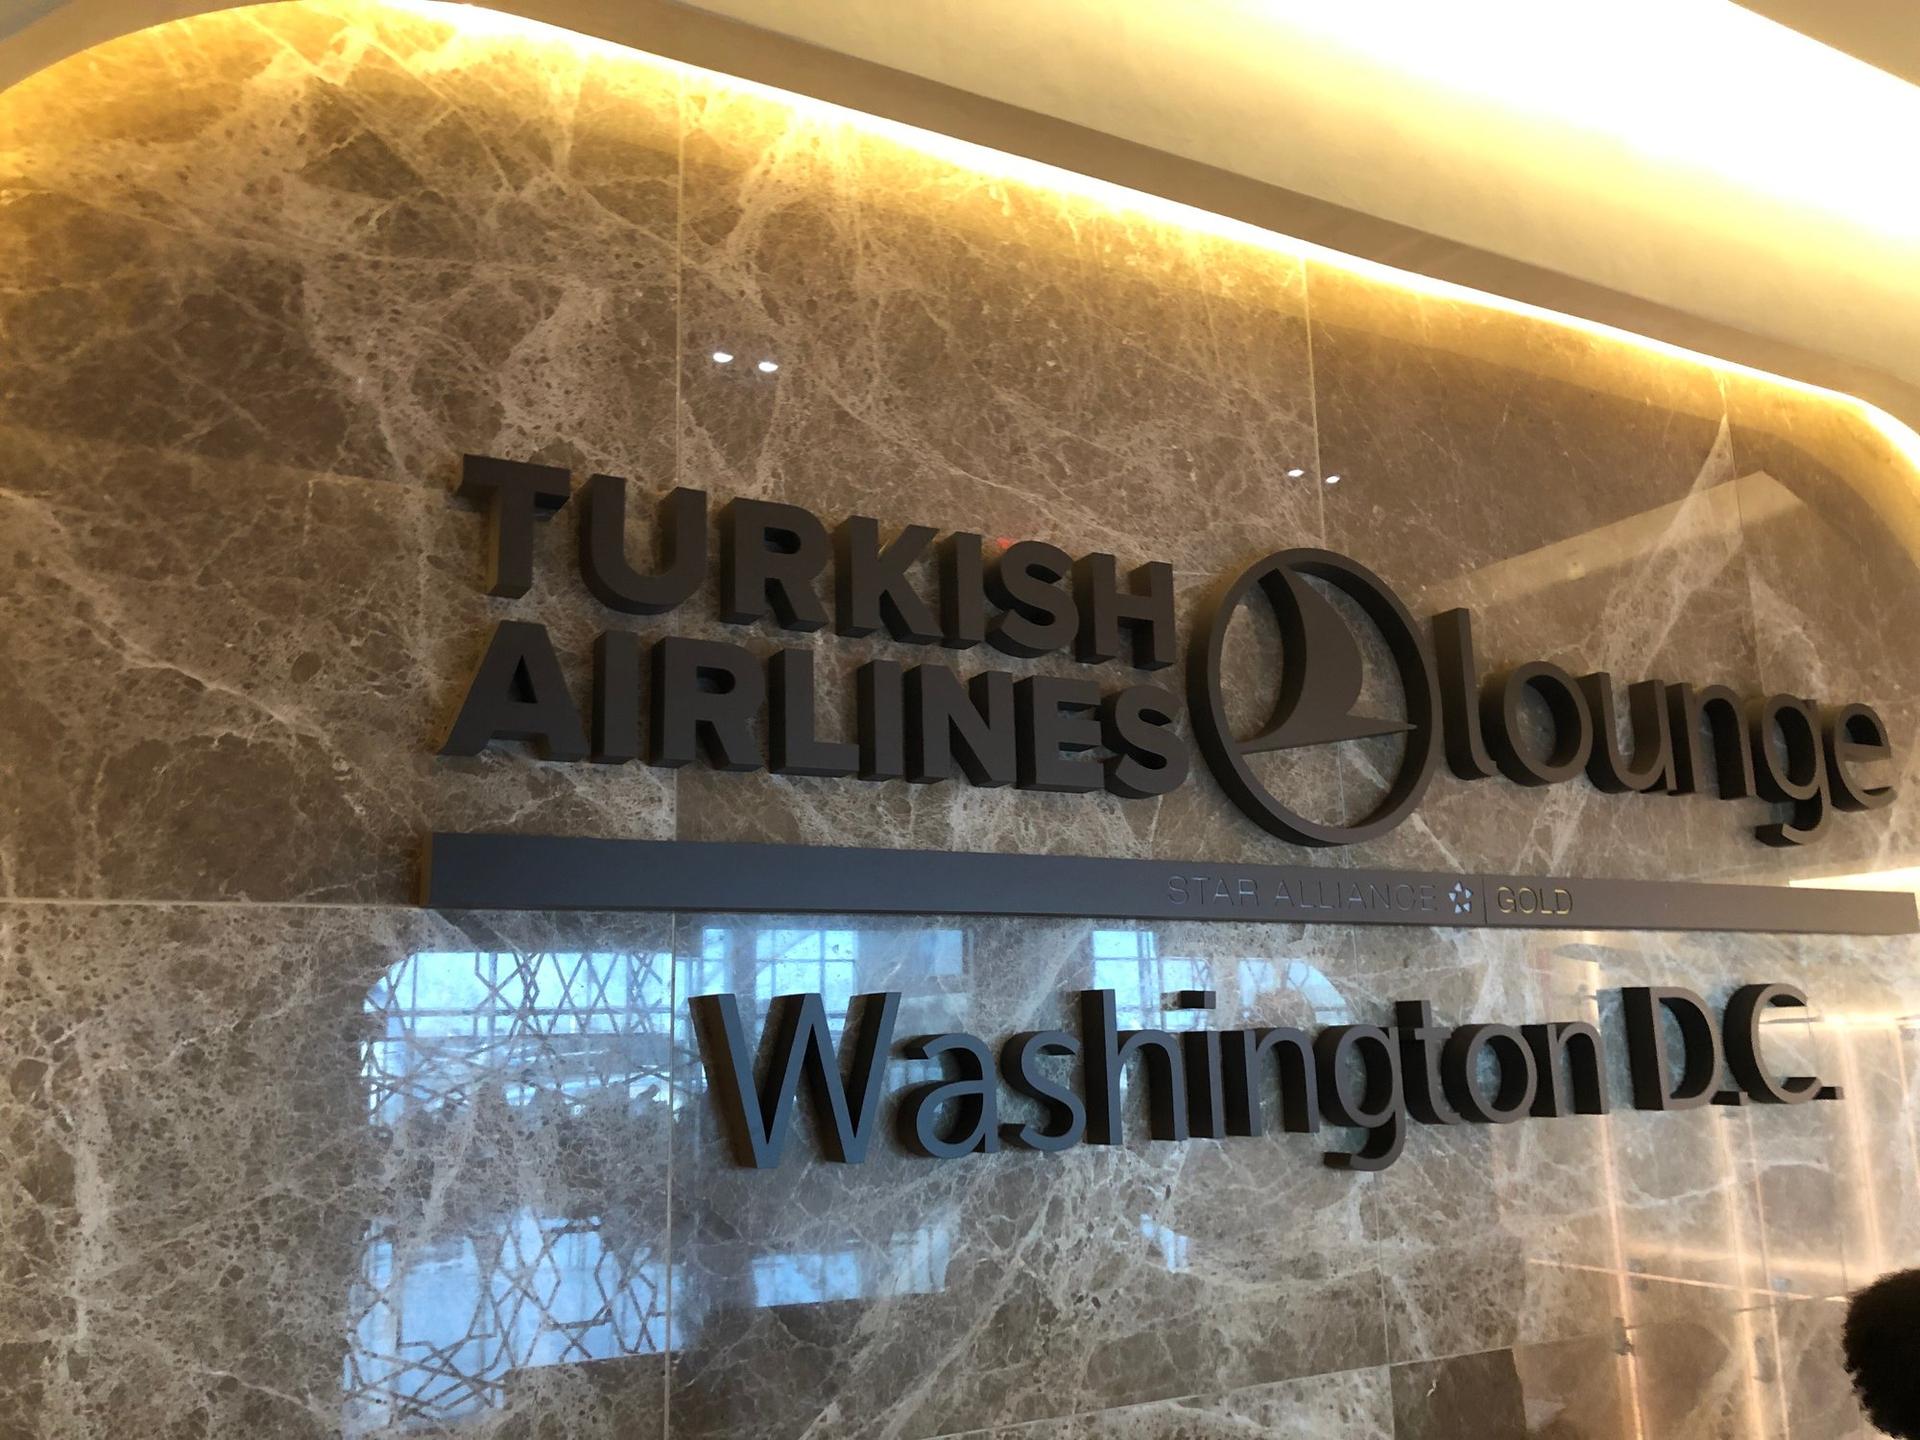 Turkish Airlines Lounge Washington D.C. image 97 of 100